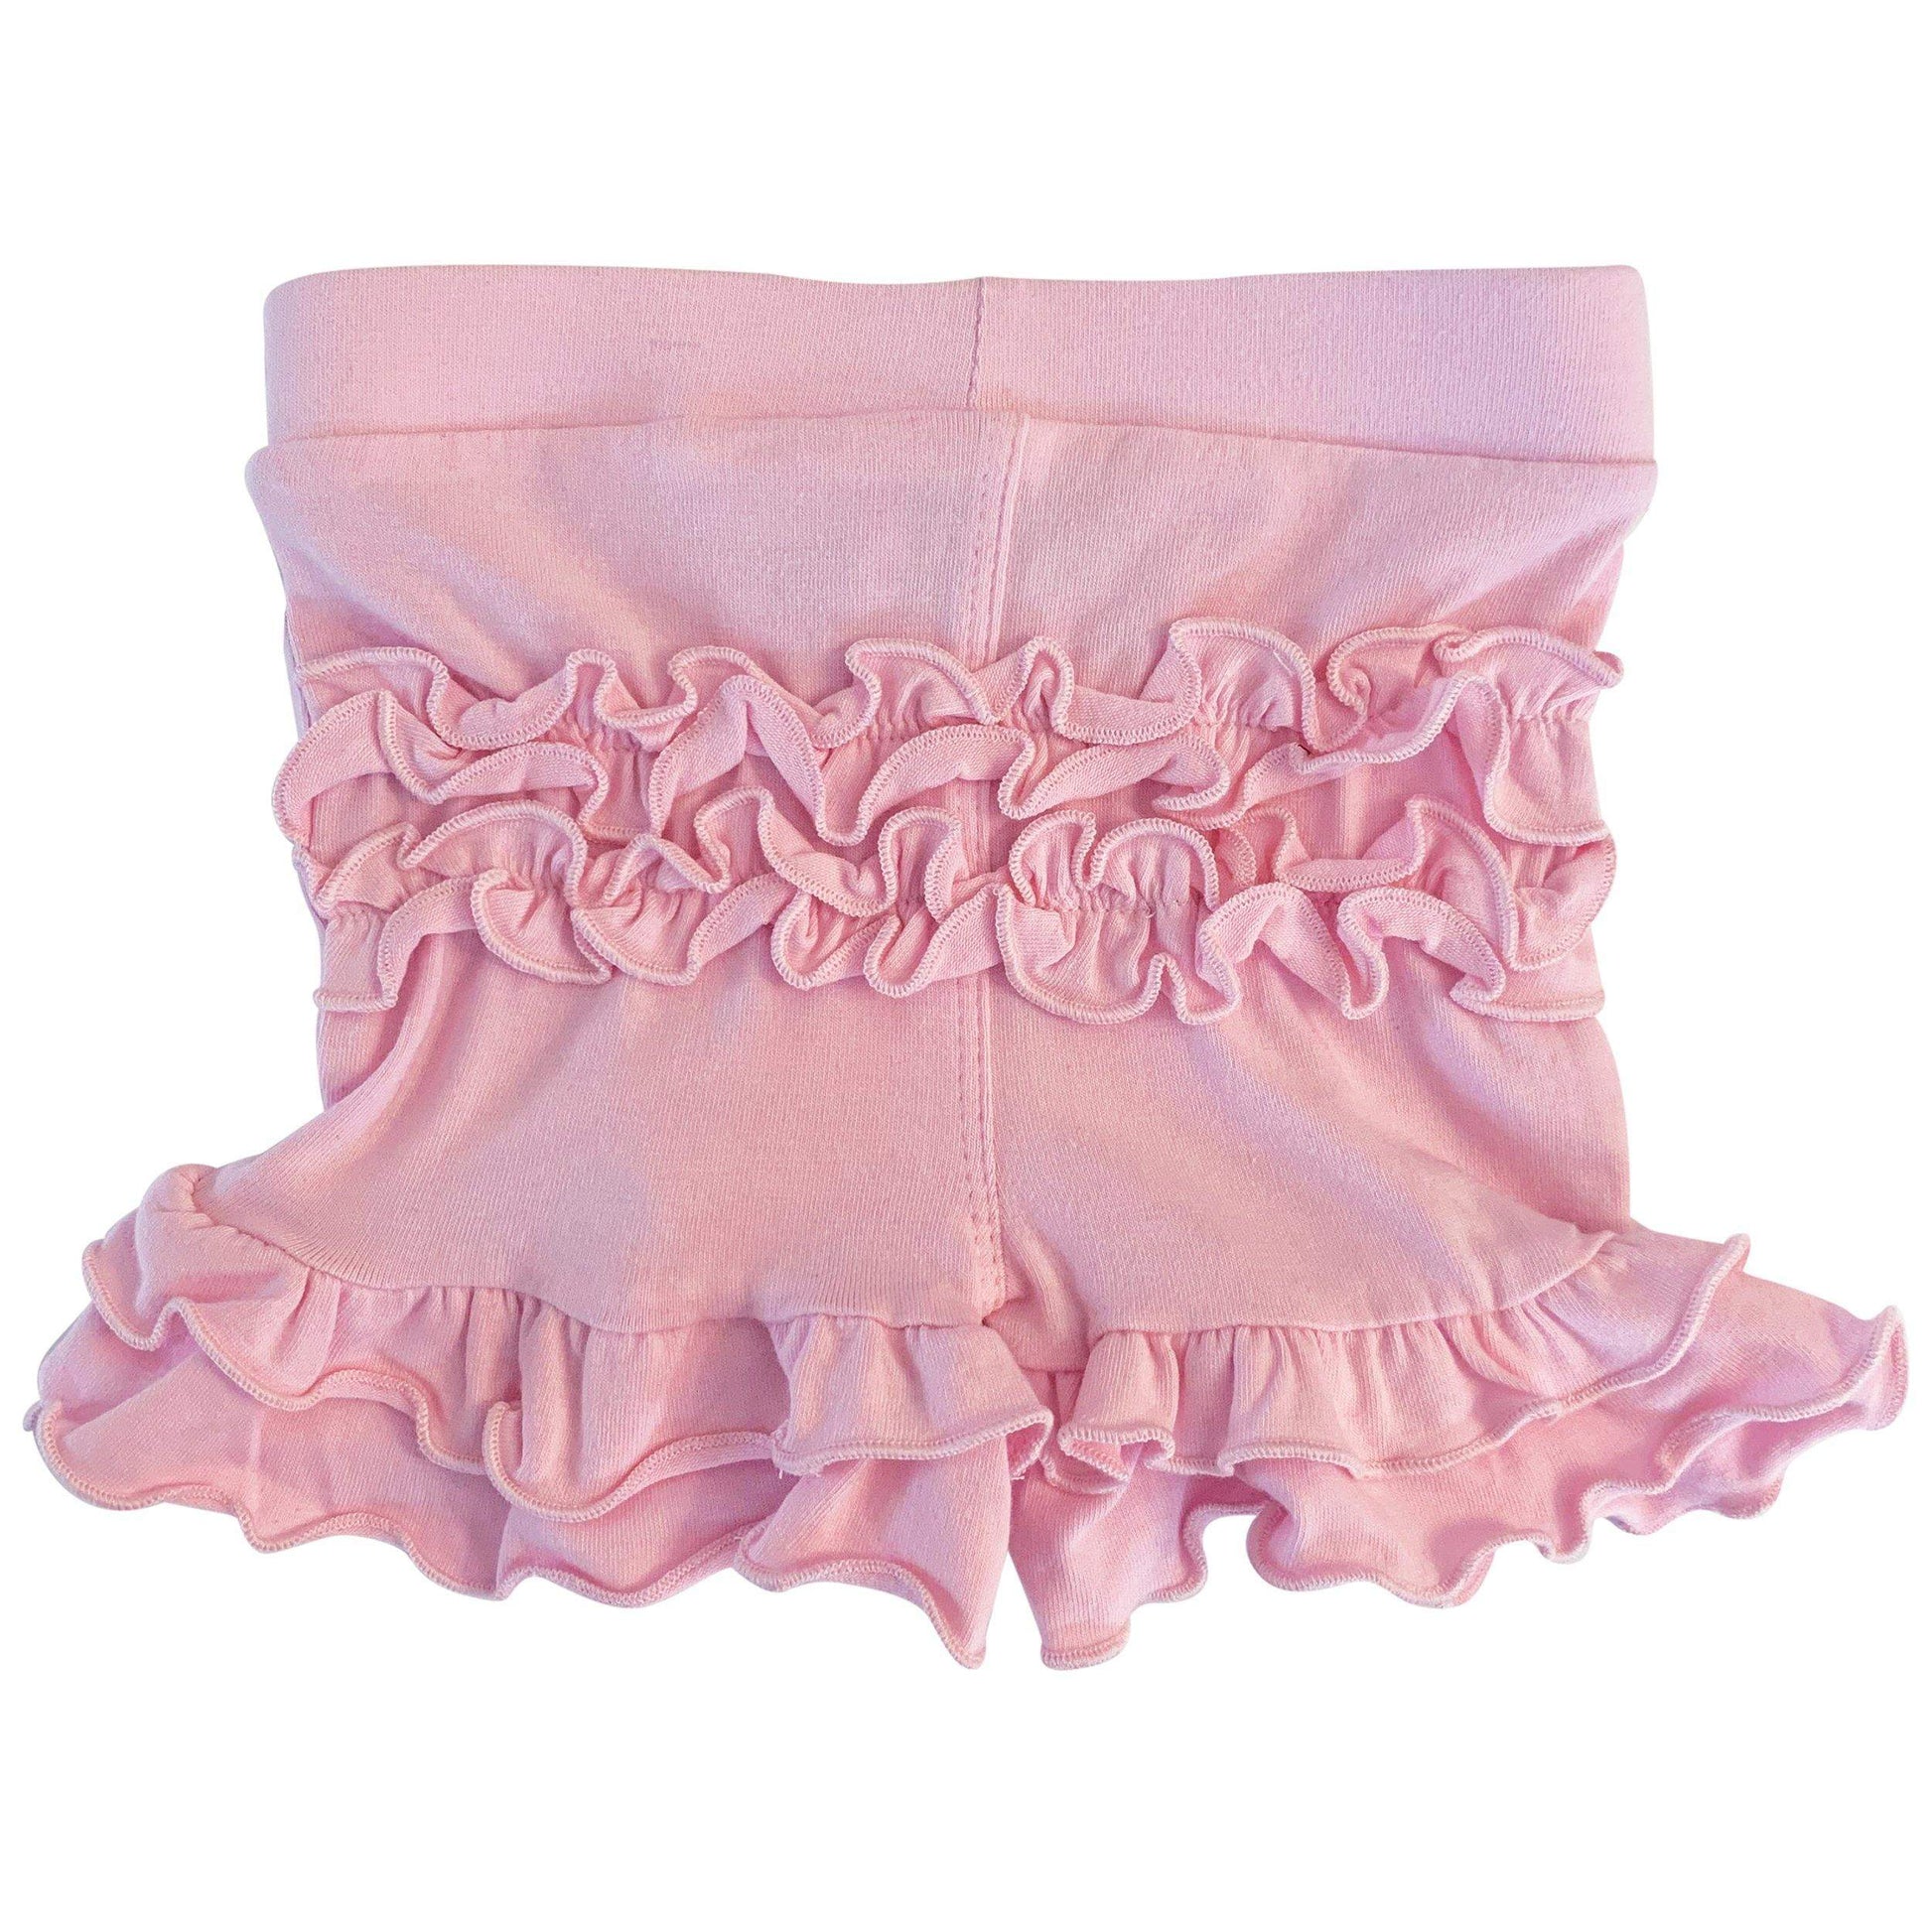 Pink Ruffle Butts Shorts Baby/Toddler (6mo-2-3T)-AnnLoren-12-24 Mo,2-3T,6-12 Mo,ANNLOREN,Pink,Shorts,Spring & Summer,Spring & Summer 2021